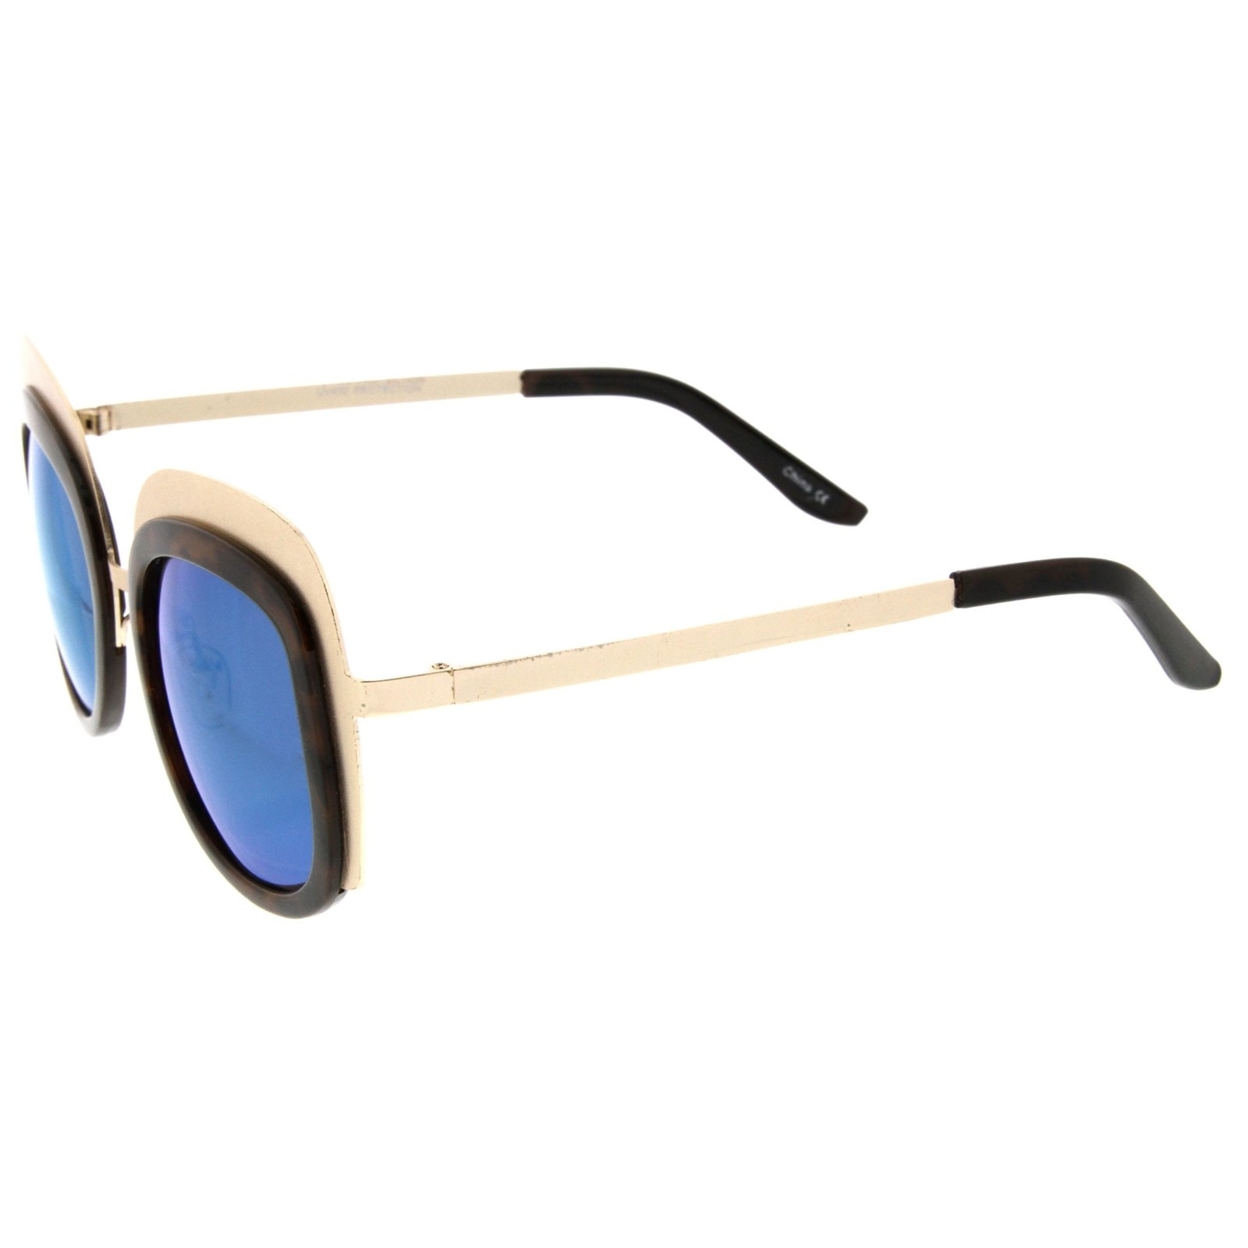 Oversize Metal Frame Border Colored Mirror Lens Square Sunglasses 43mm - Gold-Black / Magenta-Orange Mirror